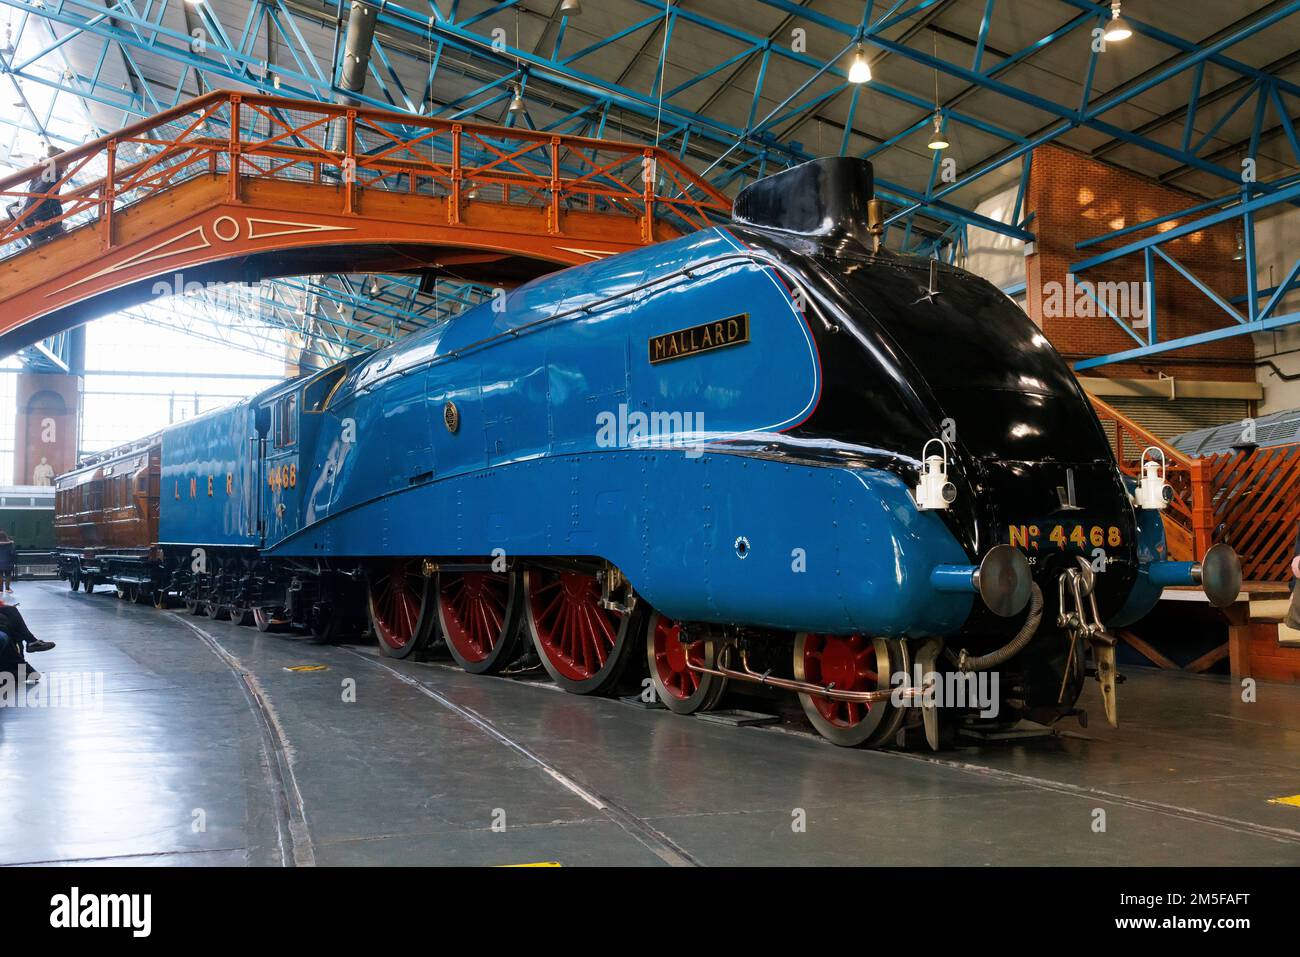 Mallard no. 4468 steam locomotive on display at the National Railway Museum, York, England. Stock Photo